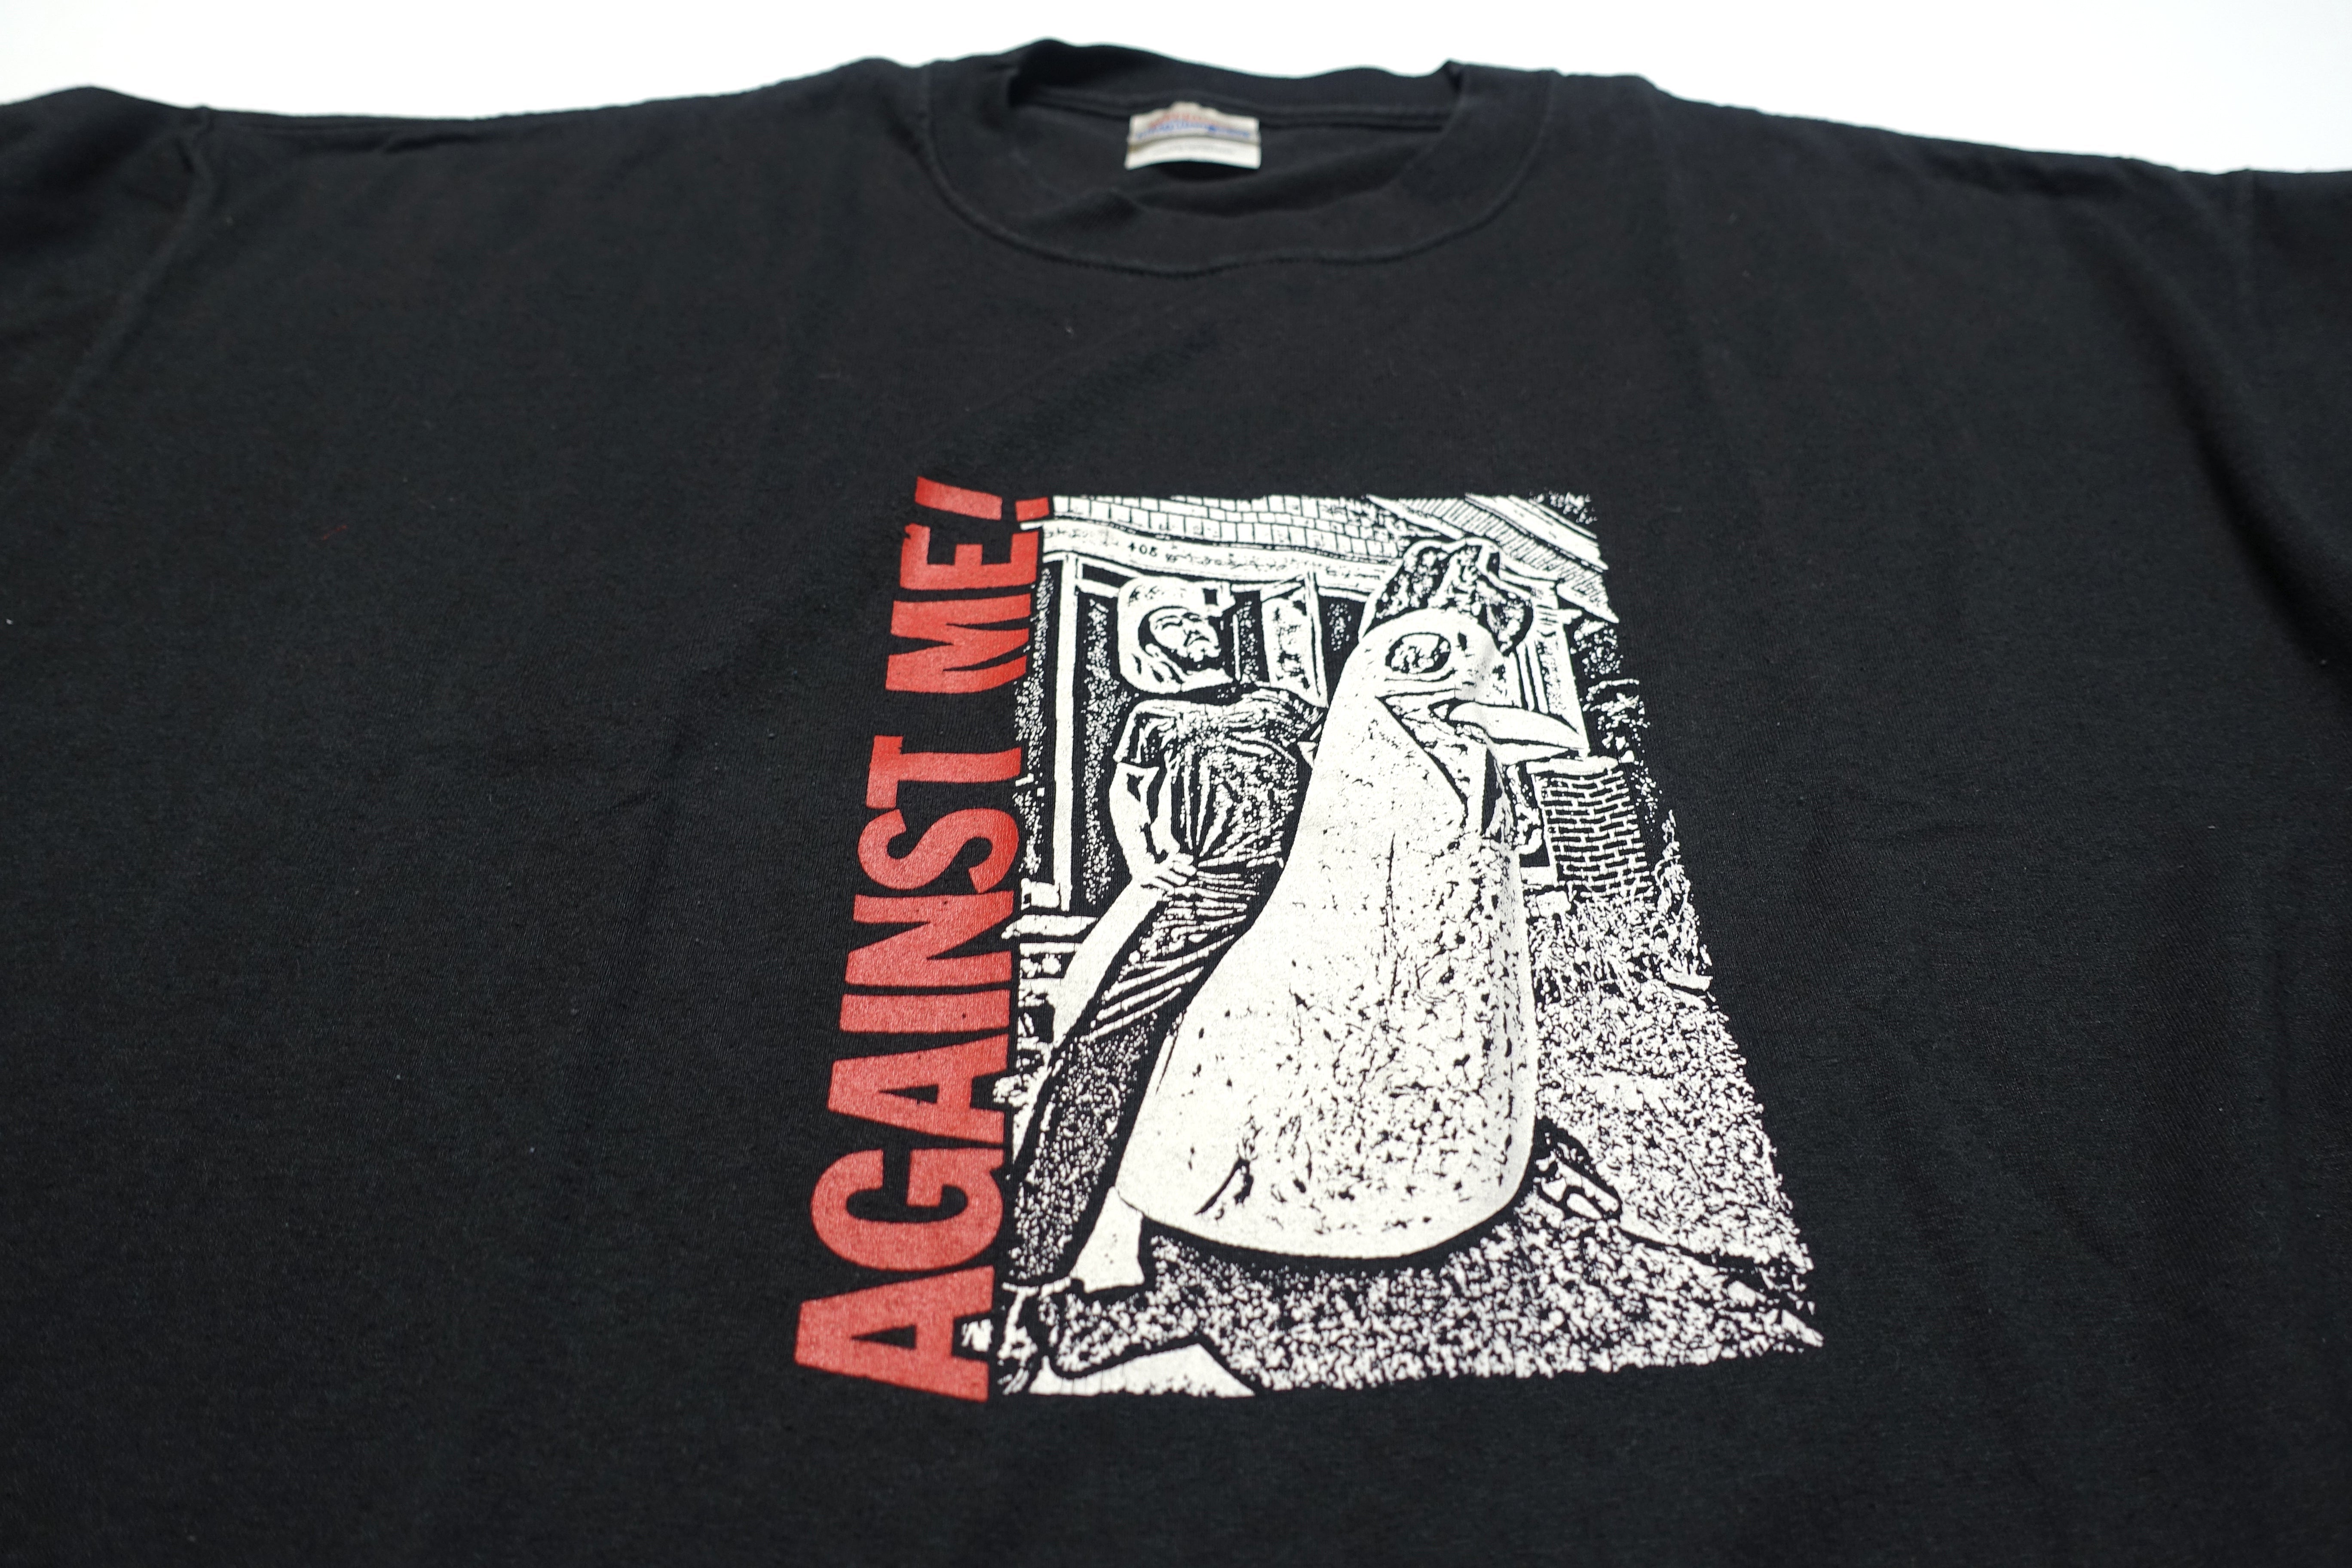 Against Me! - As The Eternal Cowboy / Chicken Cowboy 2003 Tour Shirt Size XL